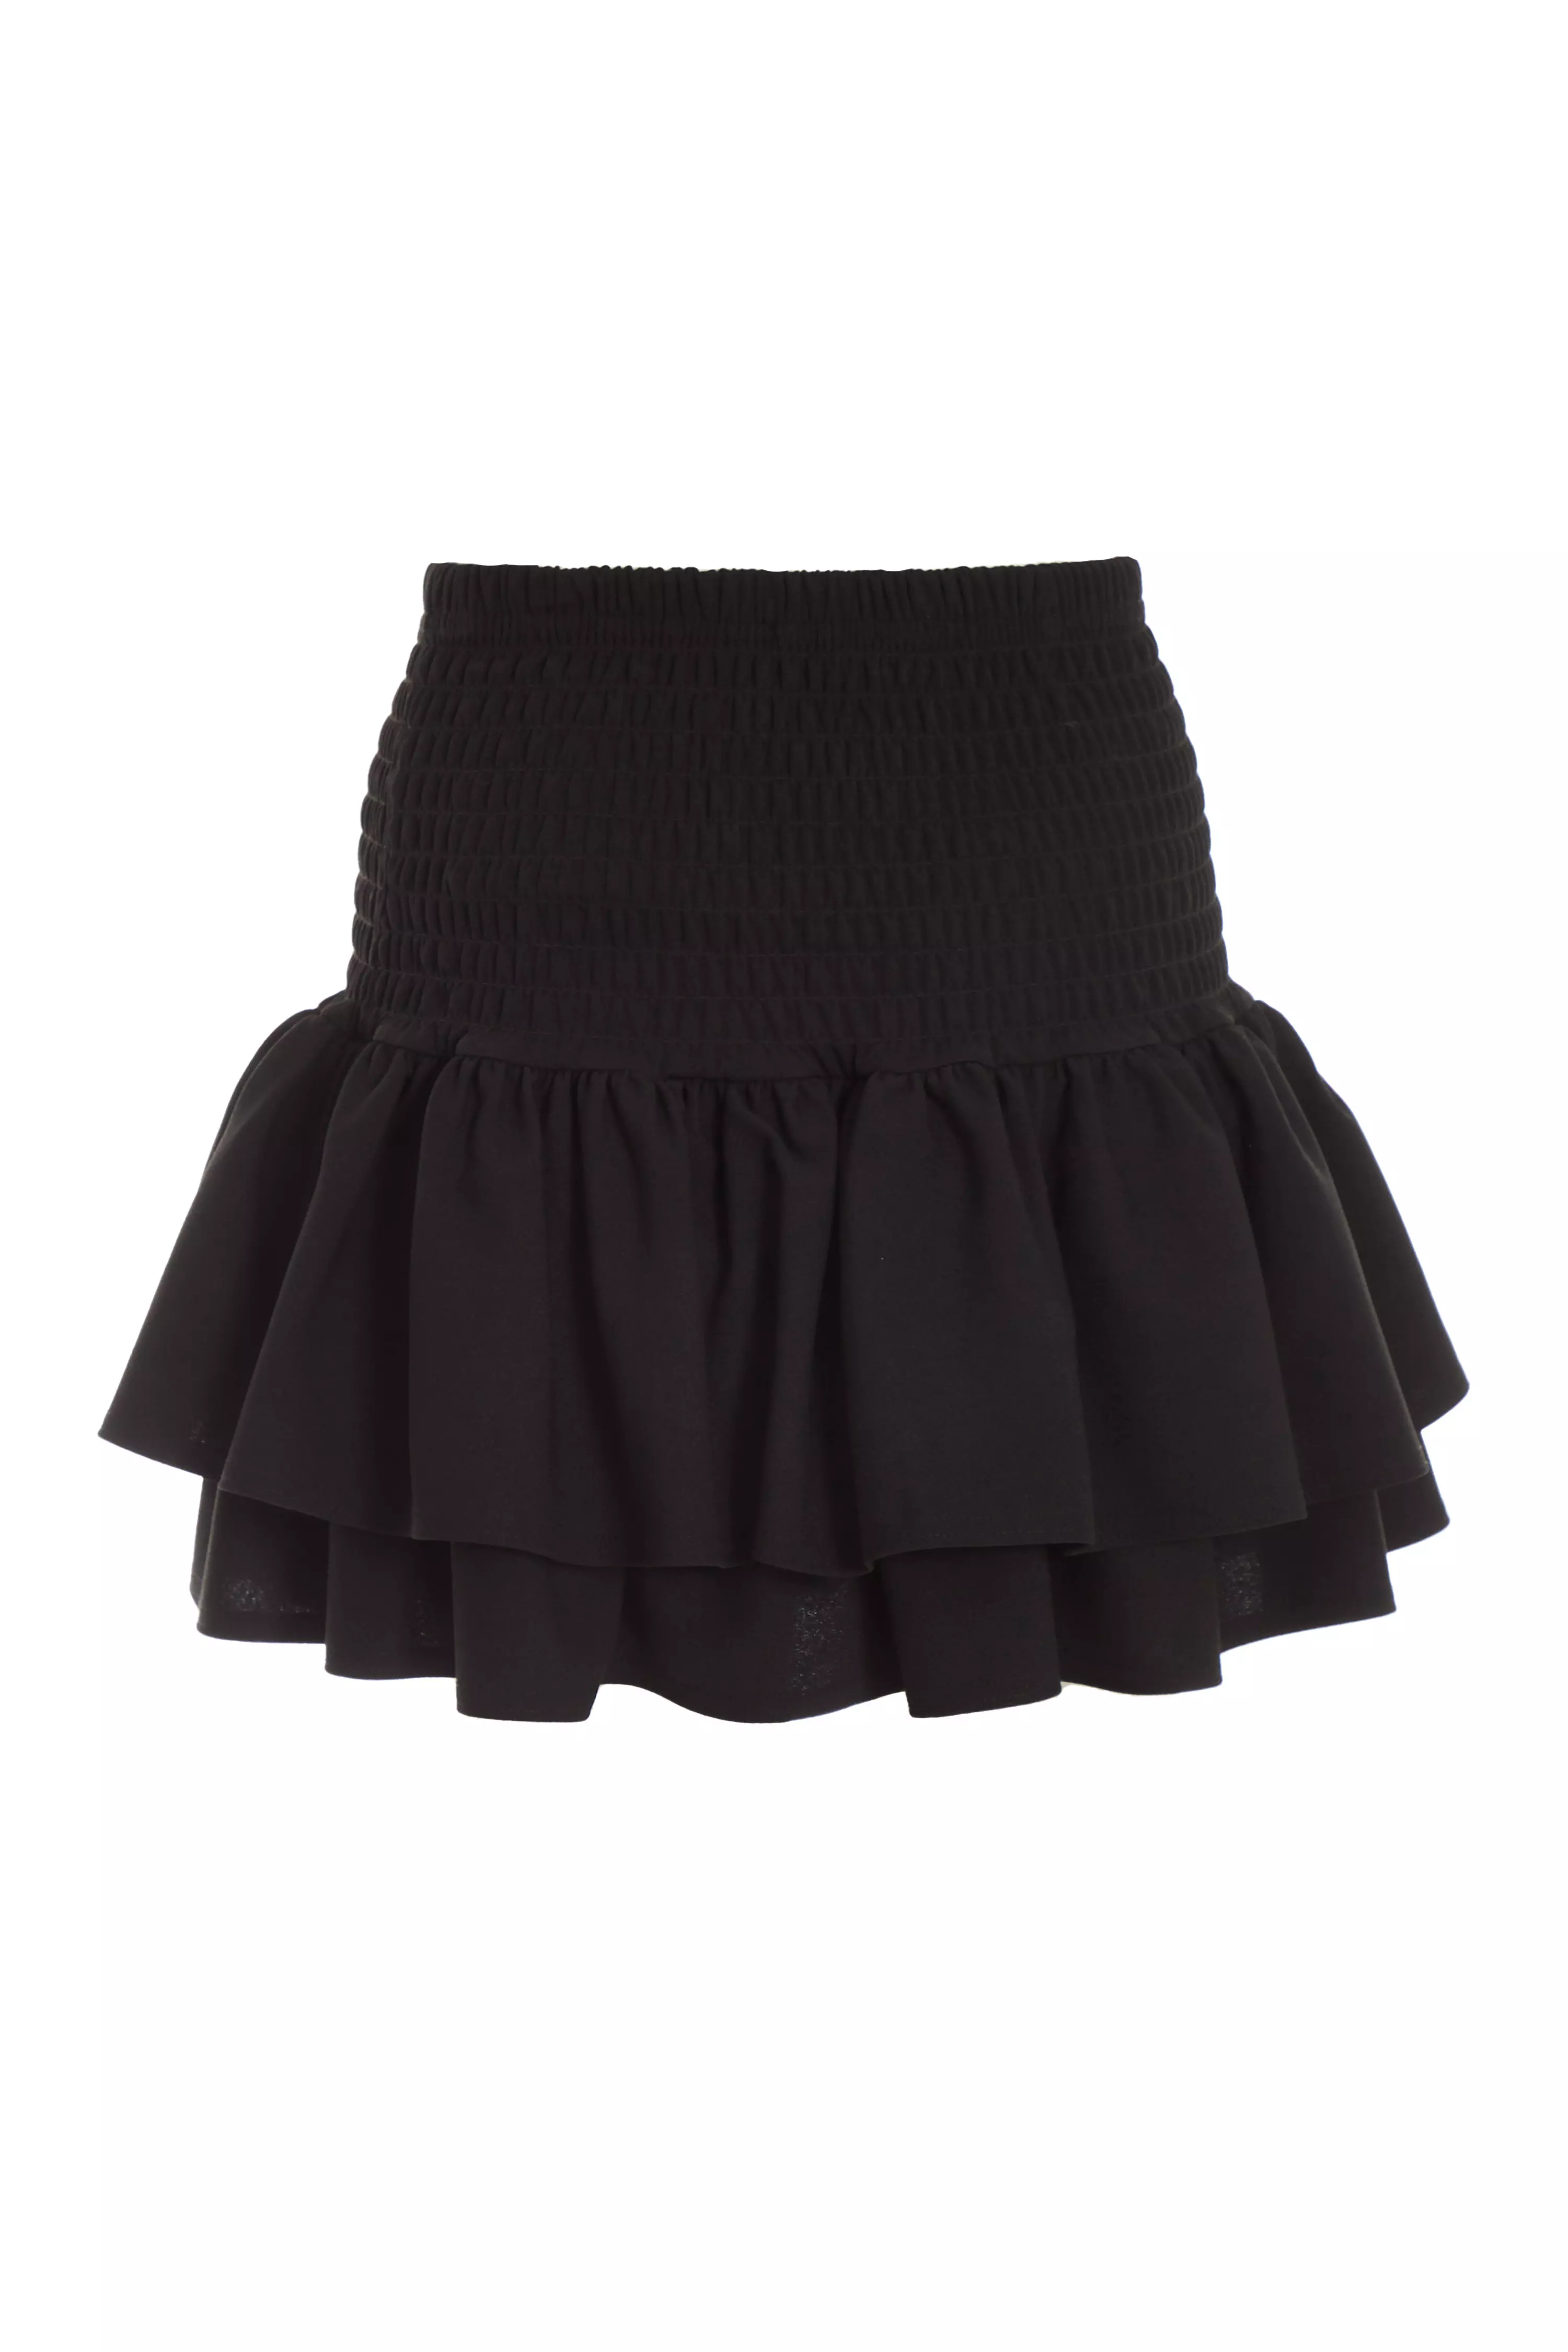 Black Ruched Frill Mini Skirt - QUIZ Clothing